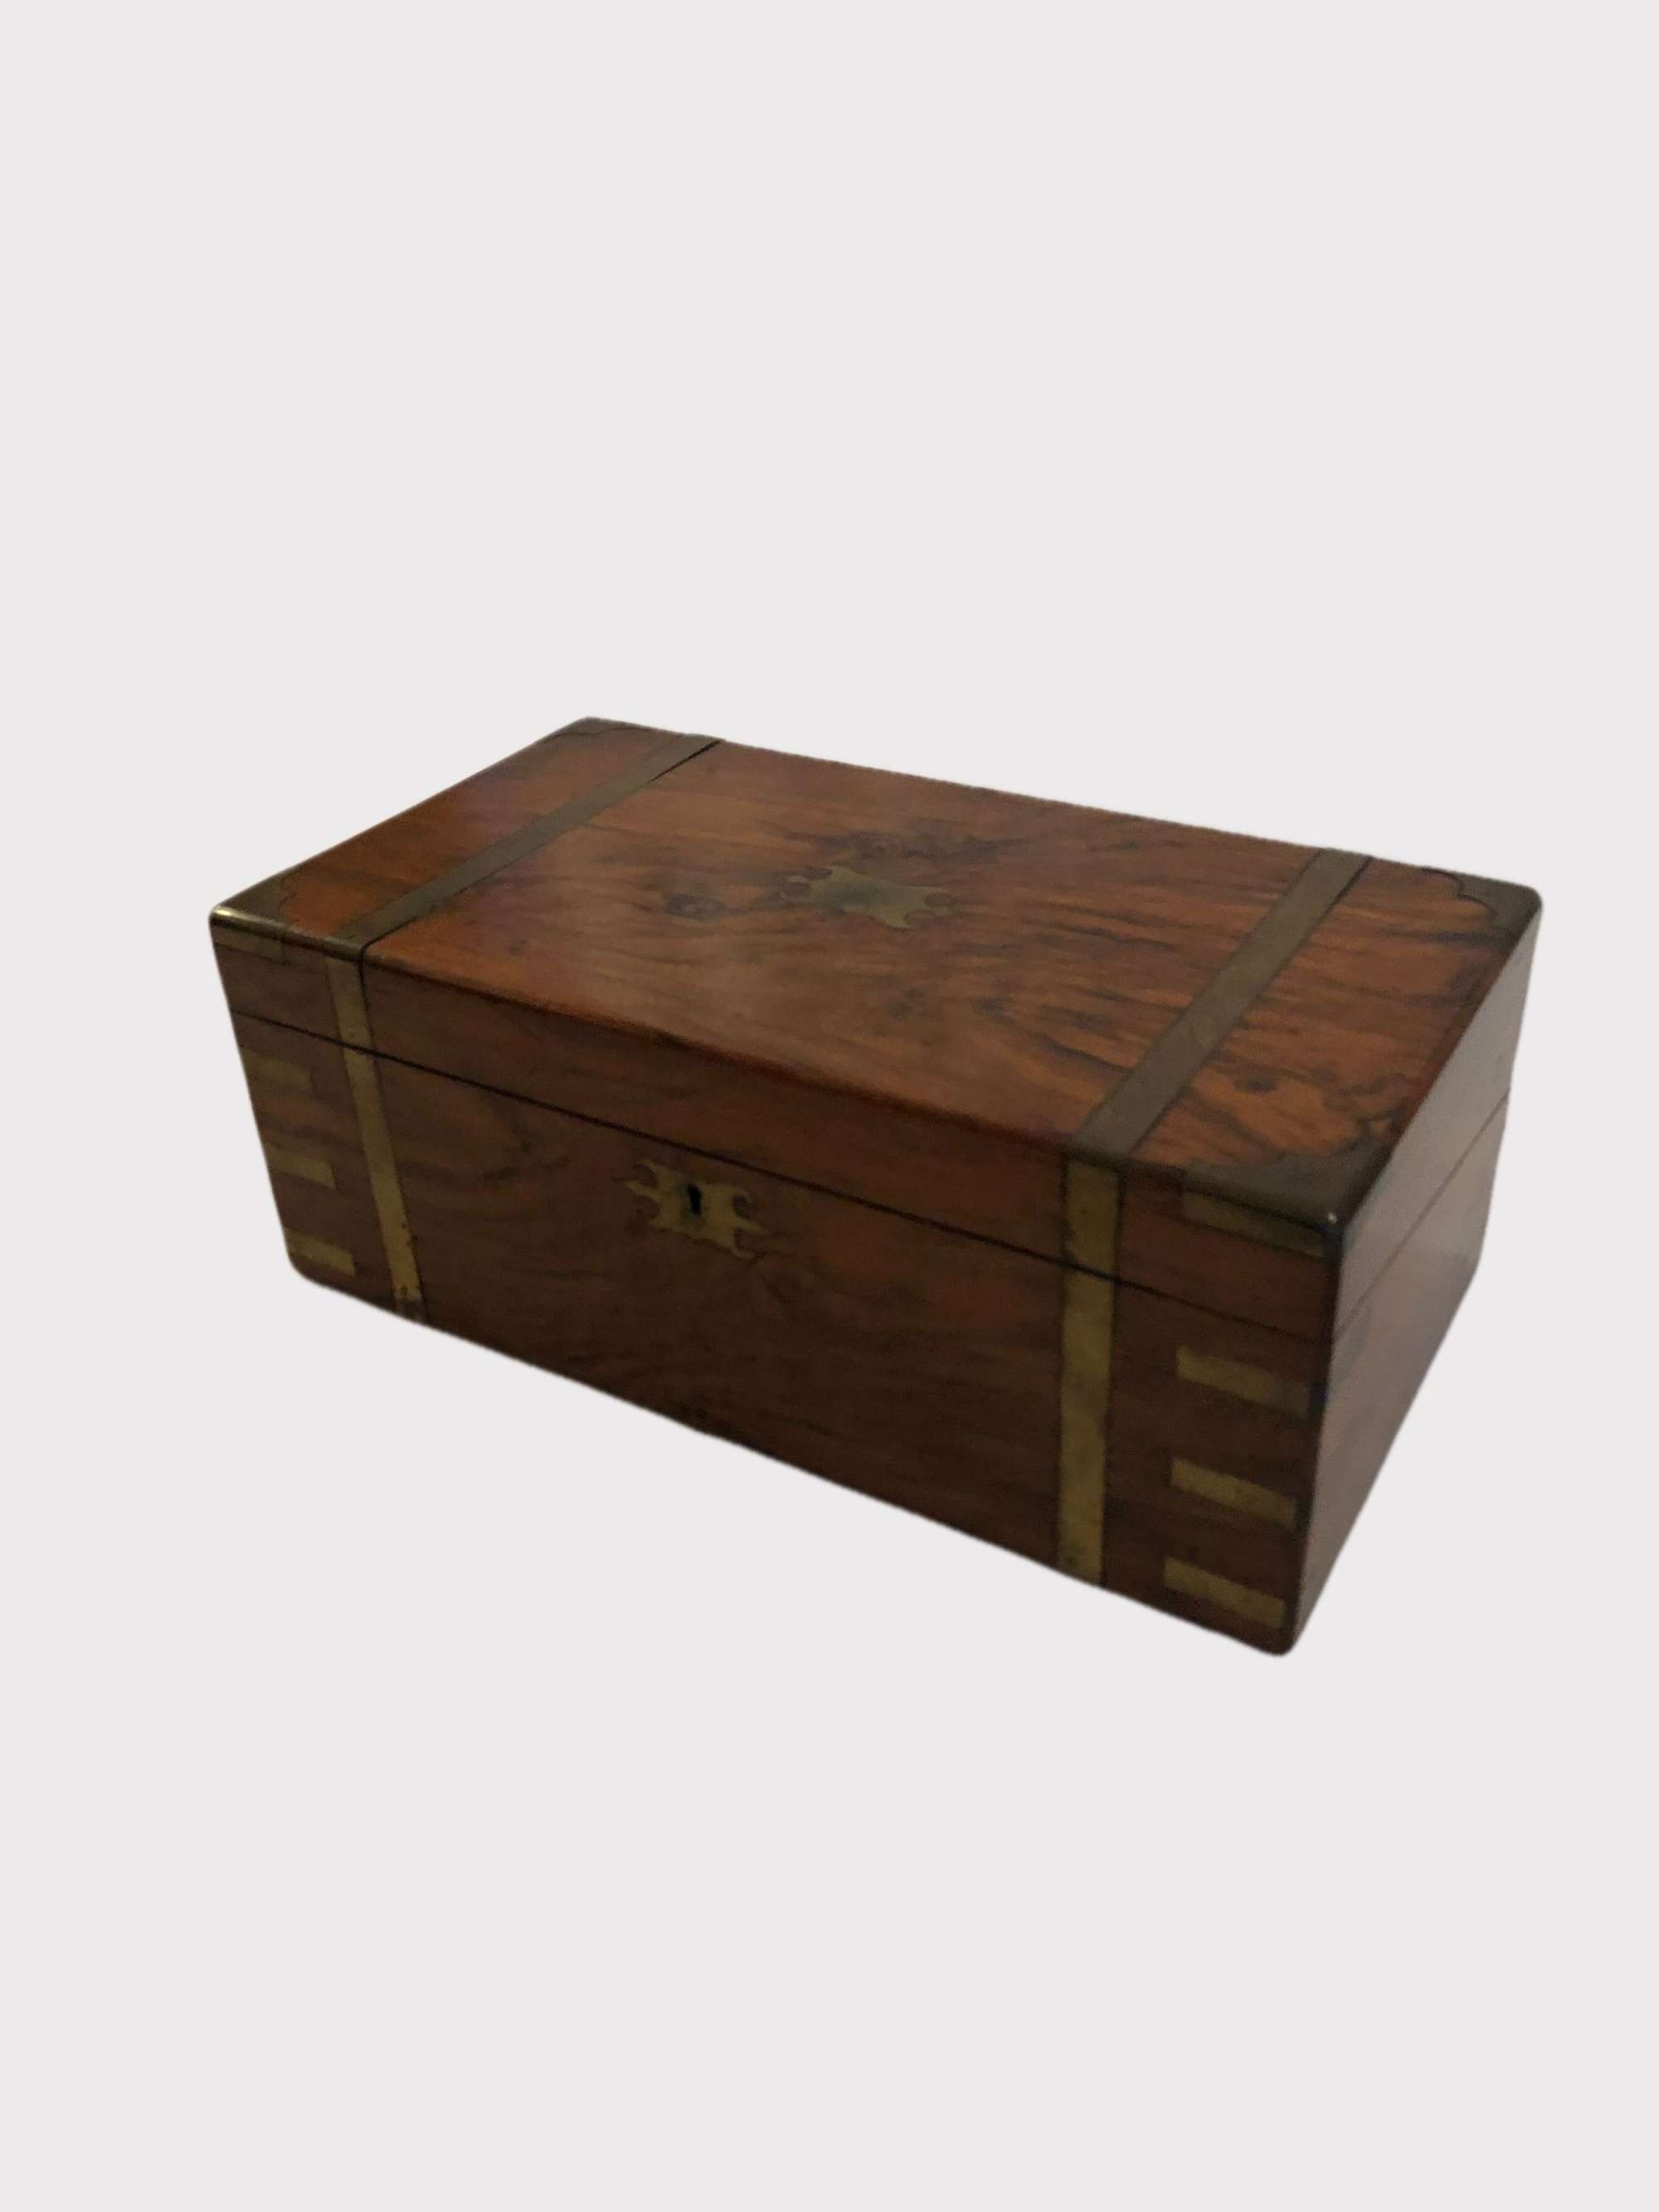 Antique Victorian Quality Burr Walnut & Brass Bound Writing Box